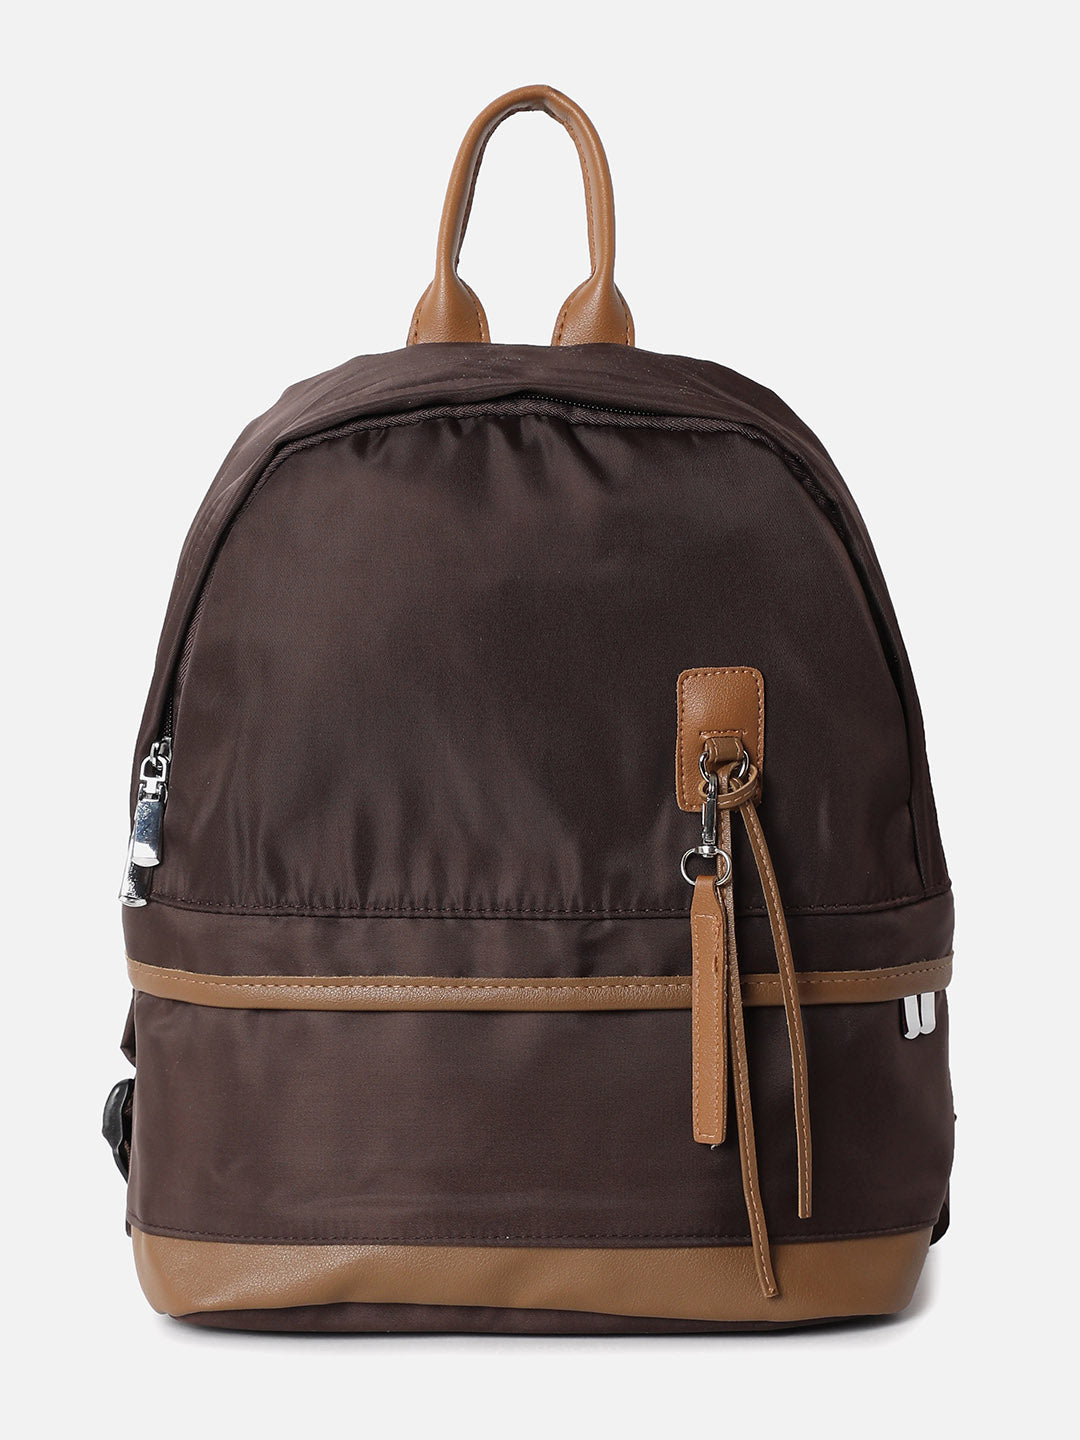 Cara Brown Backpack